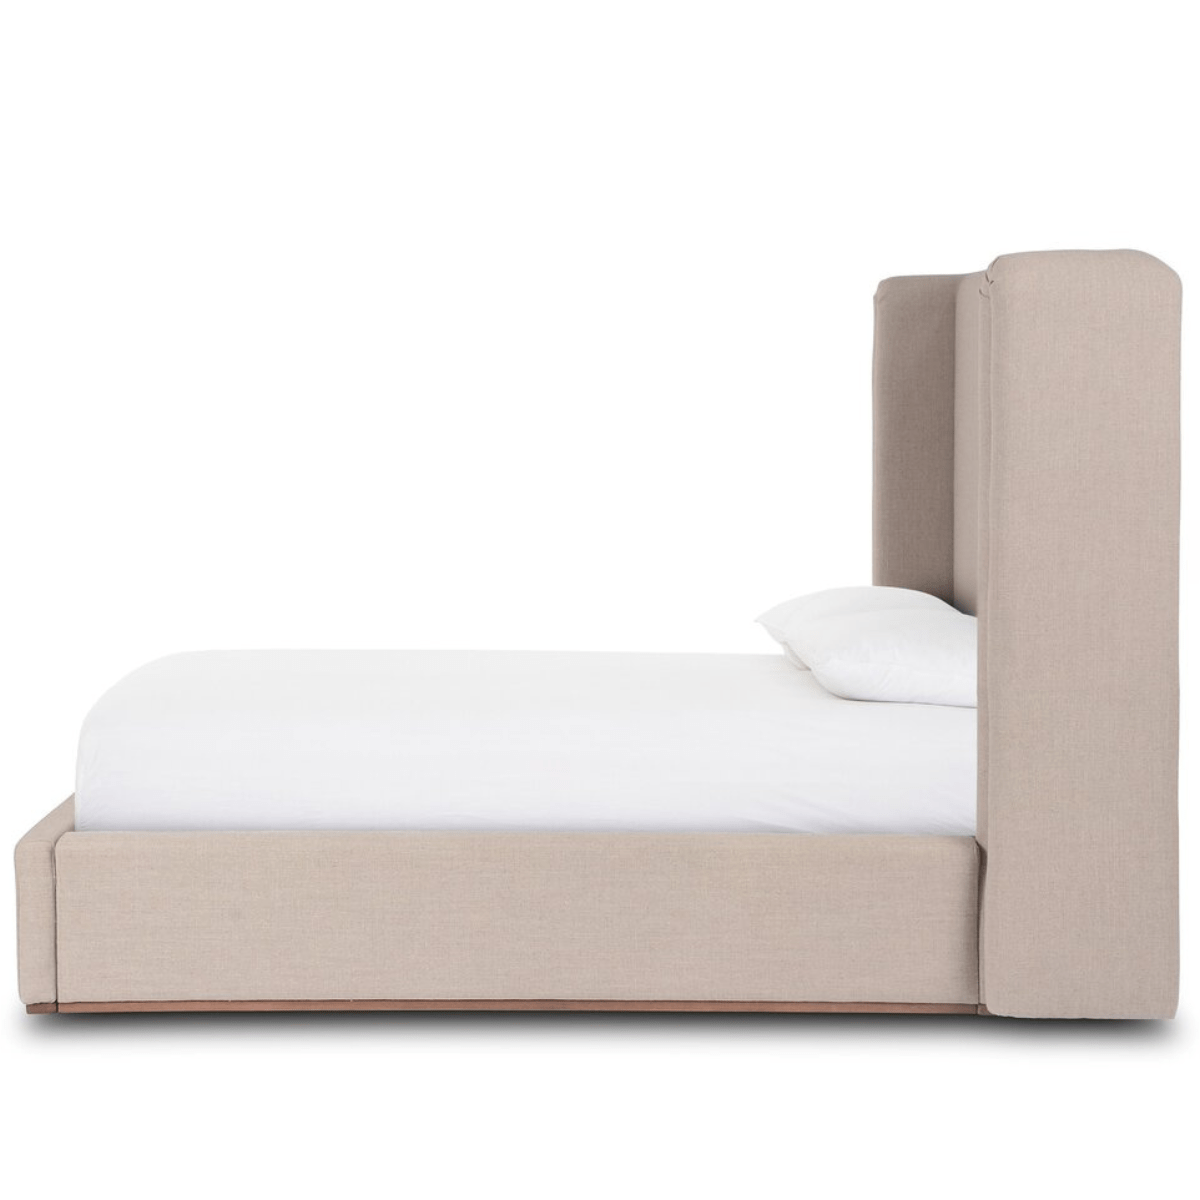 Octavia Bed Bed